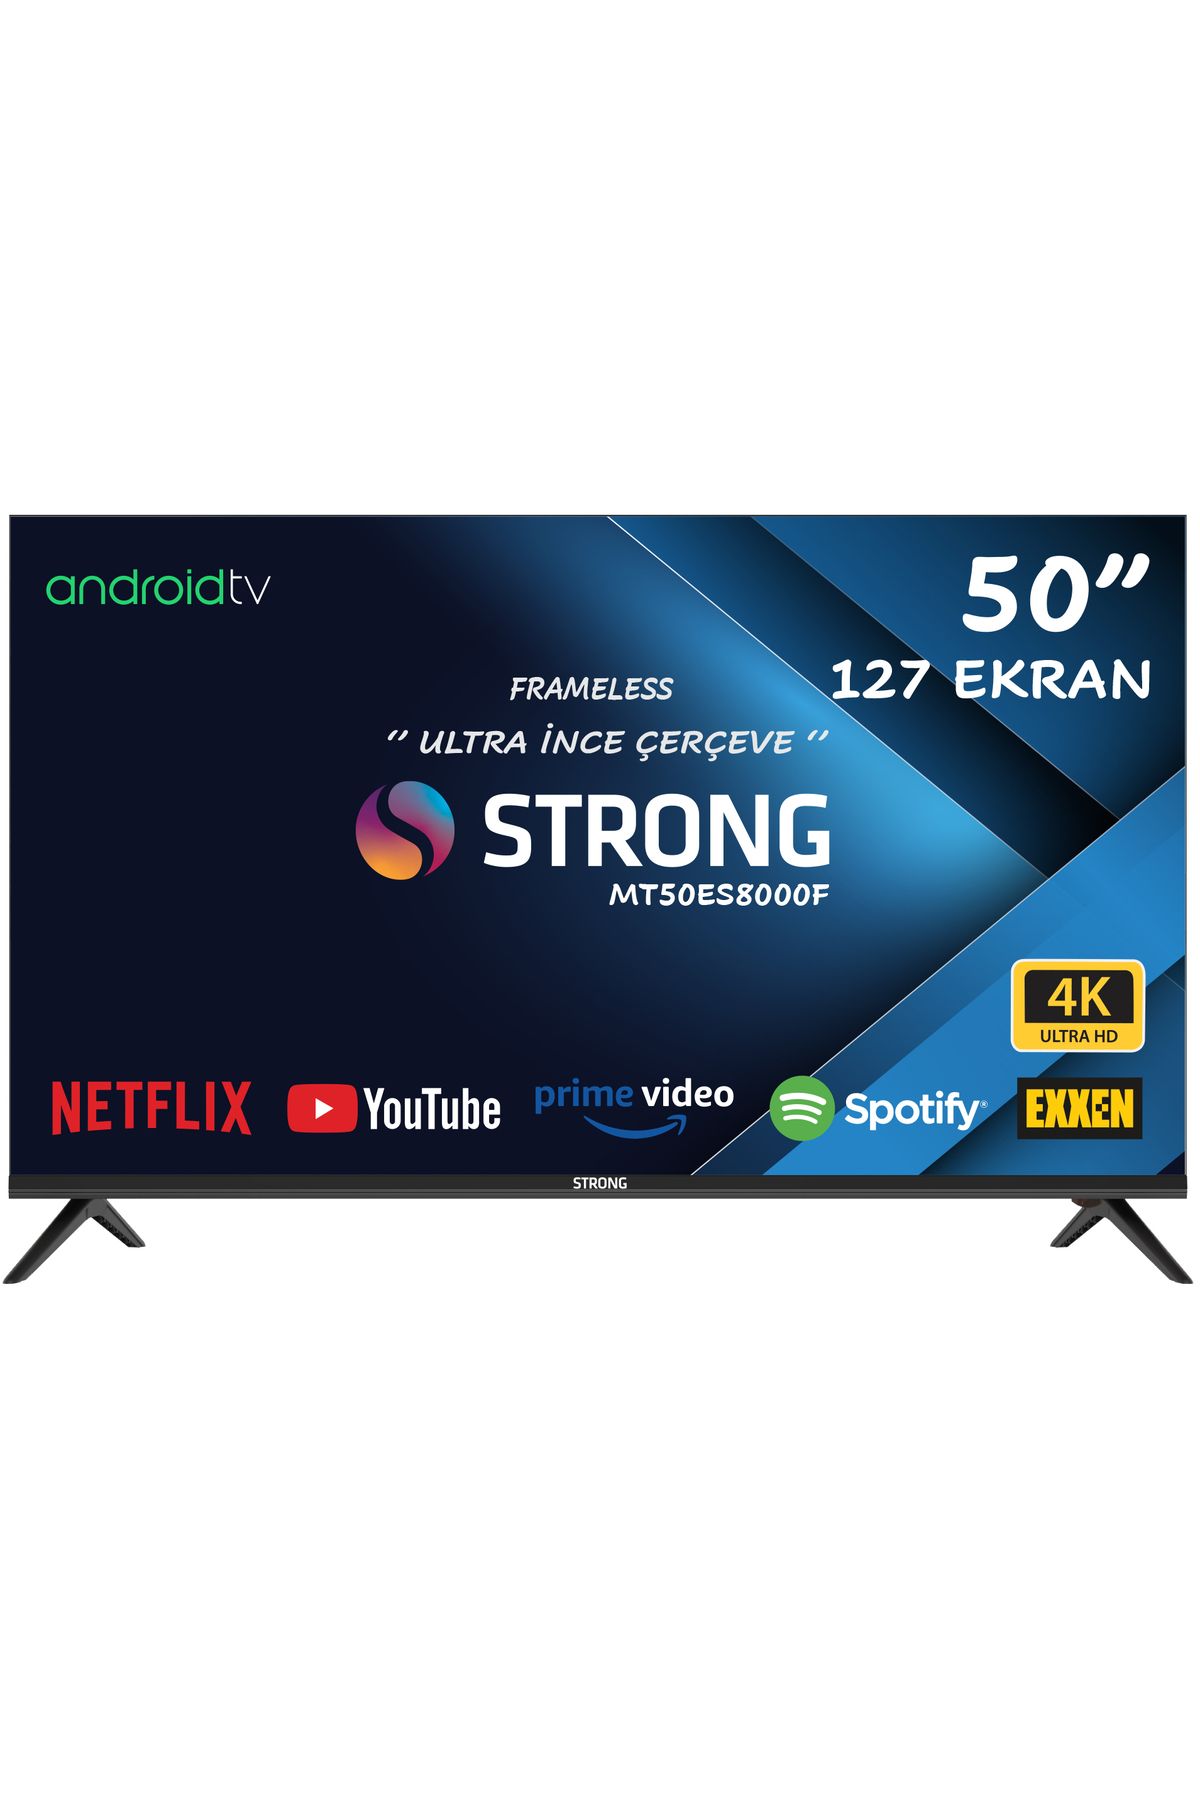 Strong Mt50es8000f 50" 127 Ekran Uydu Alıcılı 4k Ultra Hd Wifili Ultra Ince Çerçeve Android Smart Tv